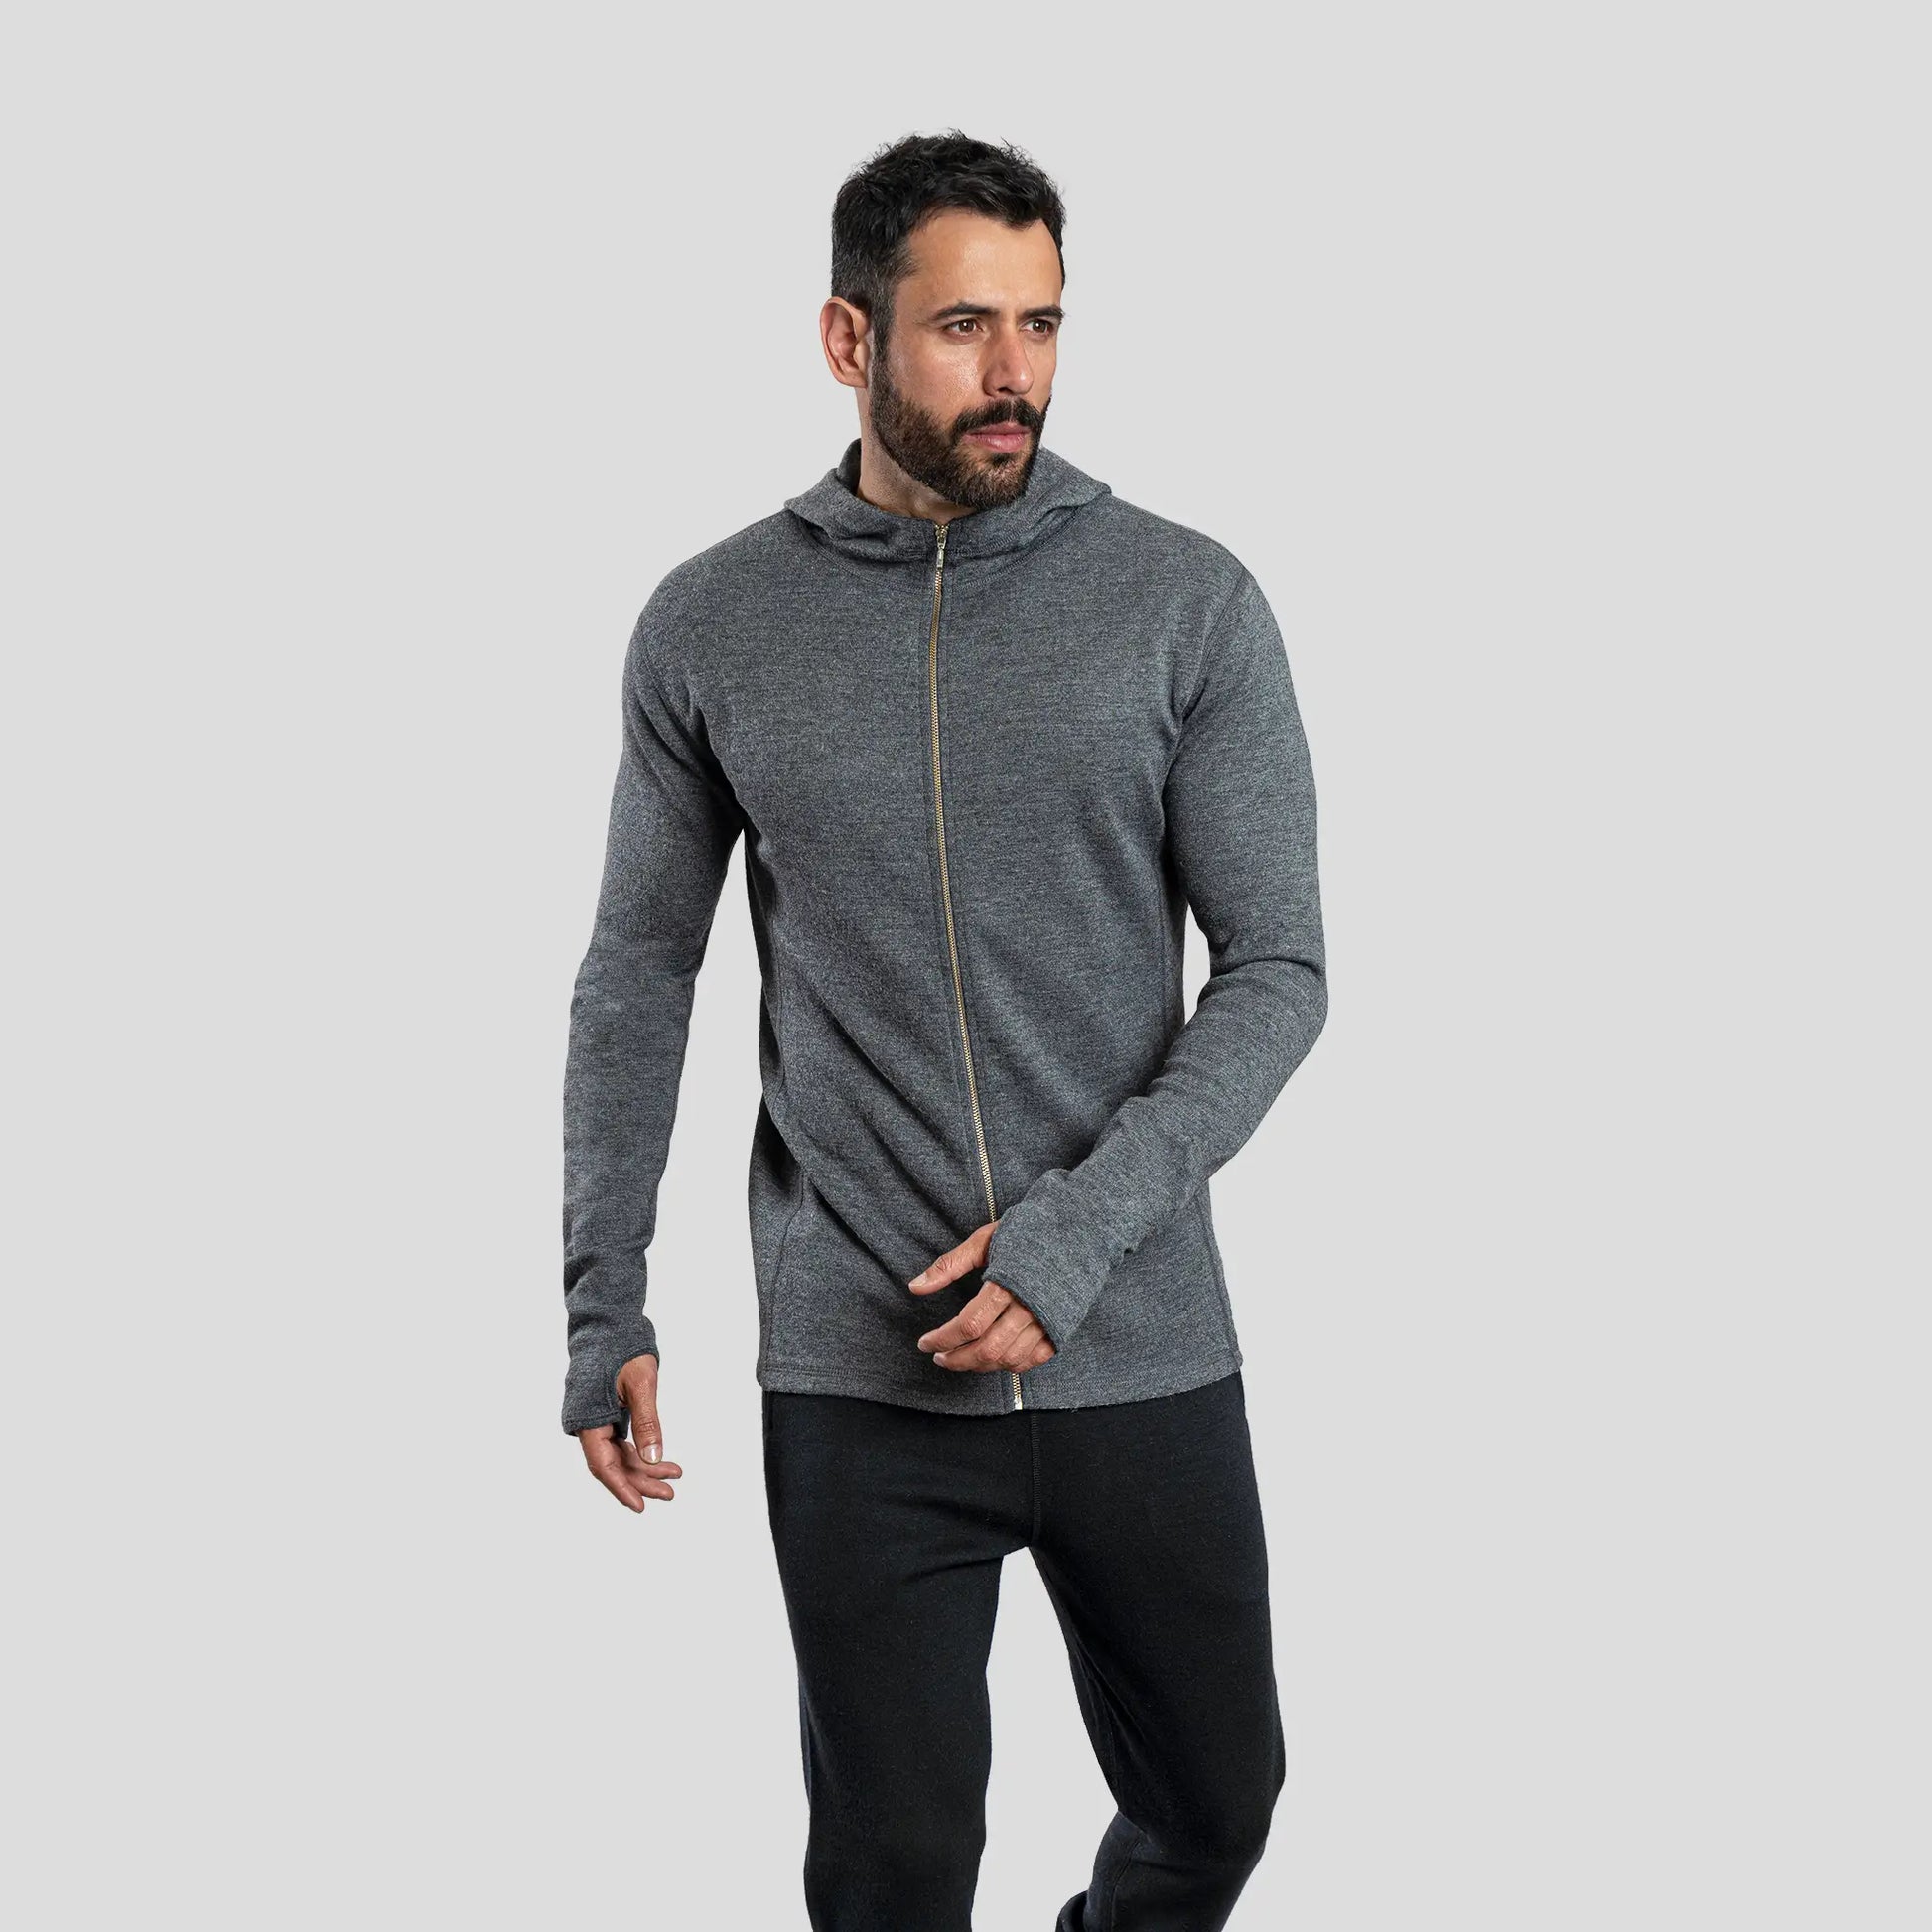 mens all purpose hoodie jacket full zip color gray